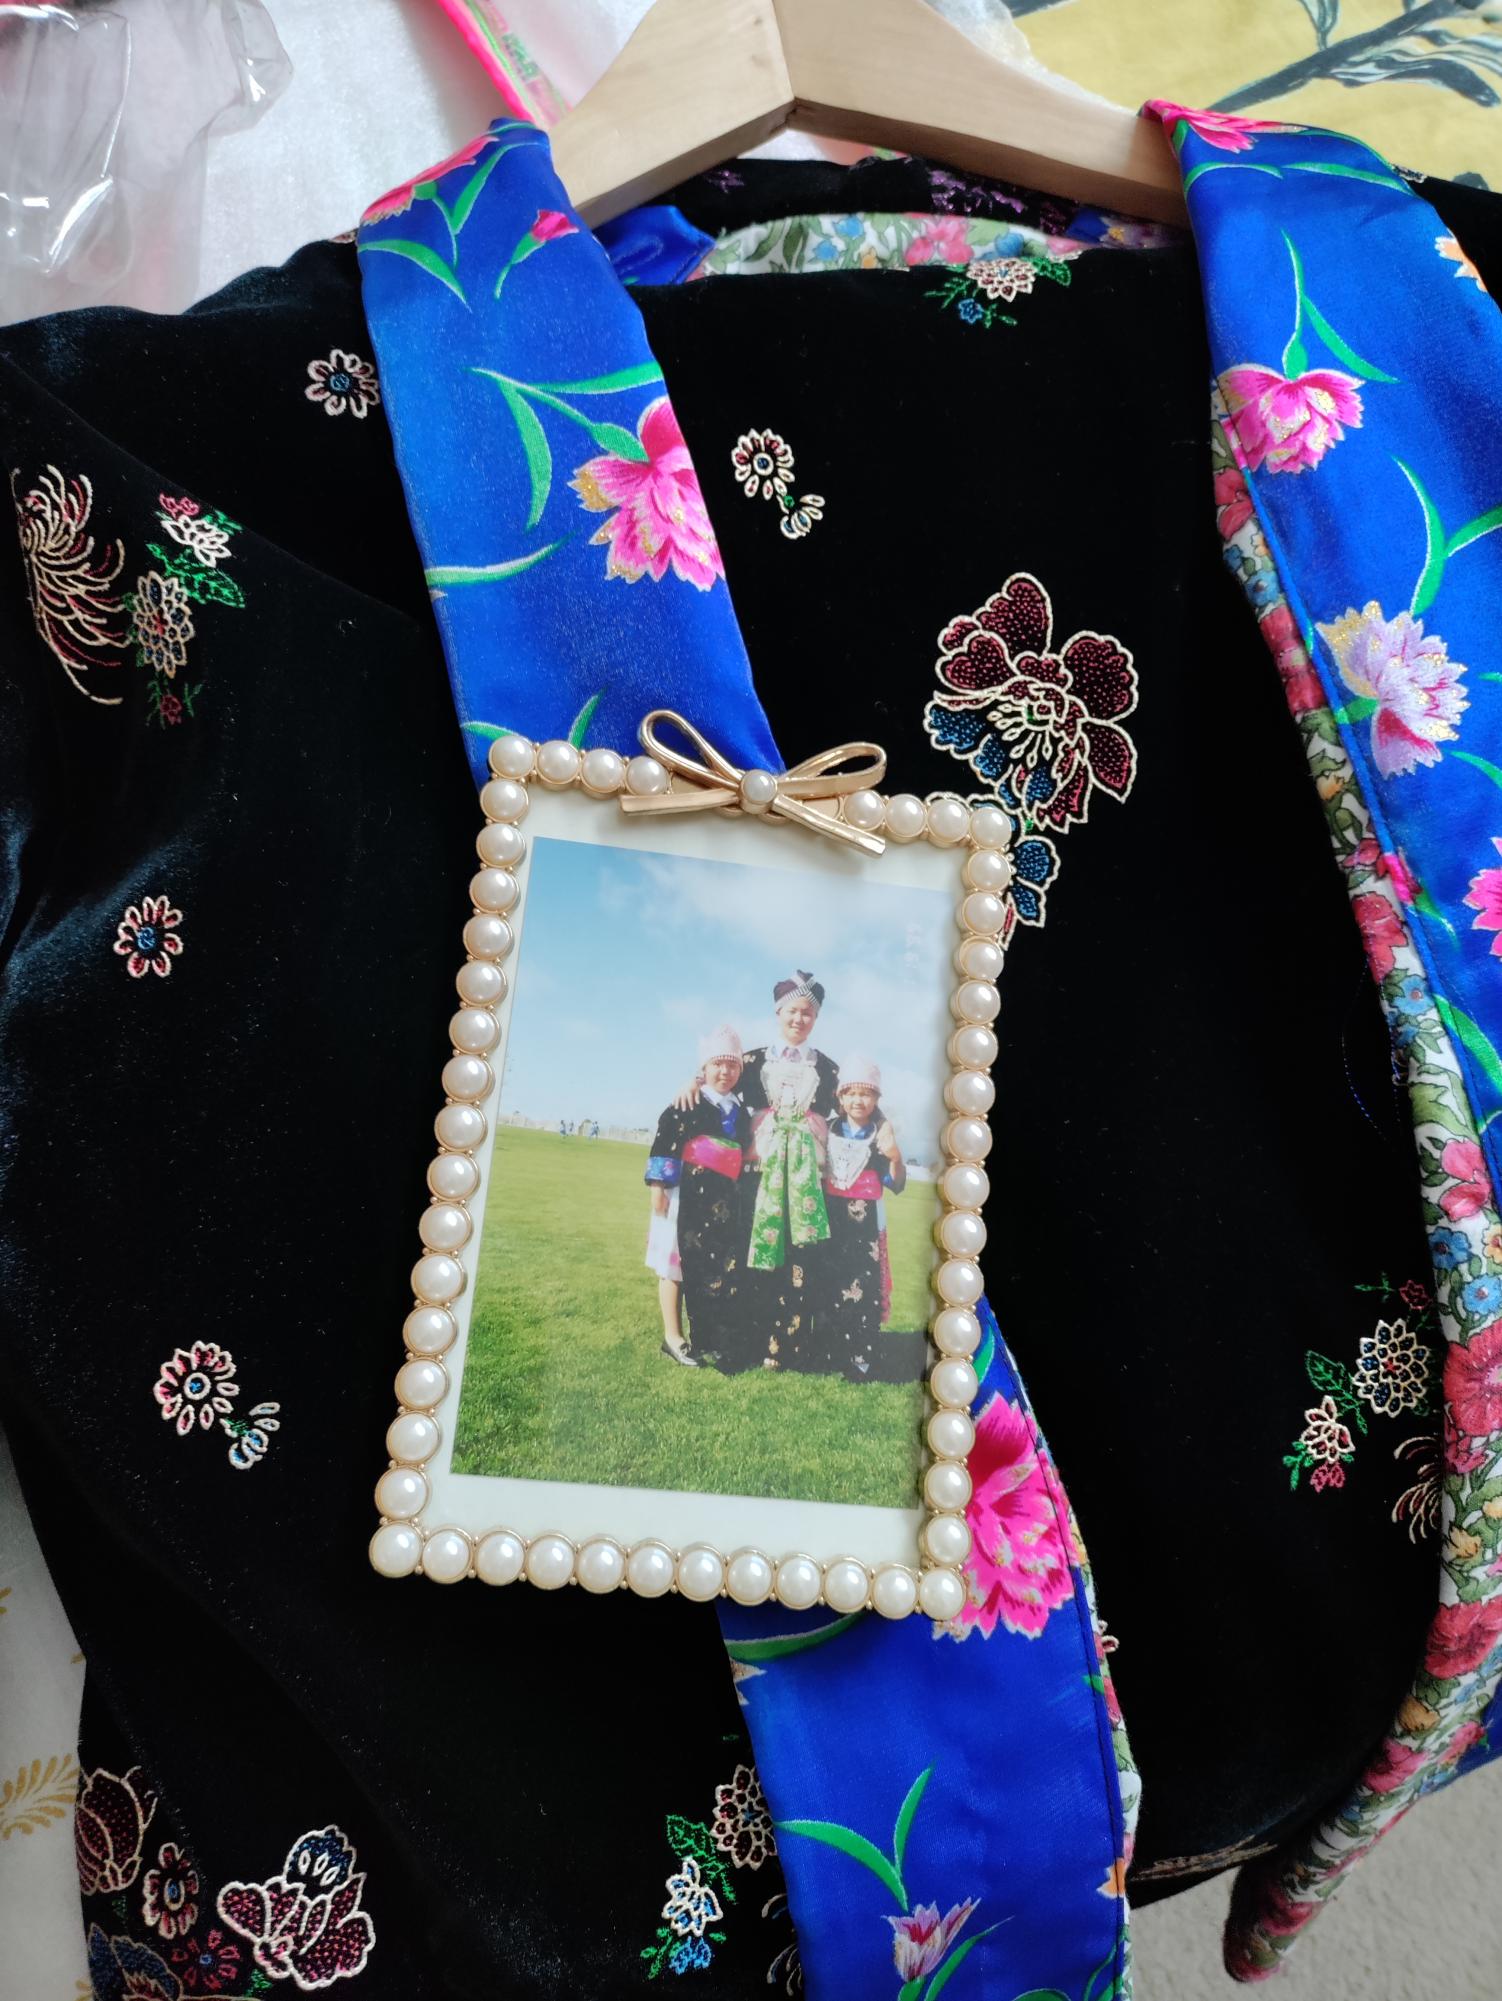 Hmong+stories+told+through+textiles